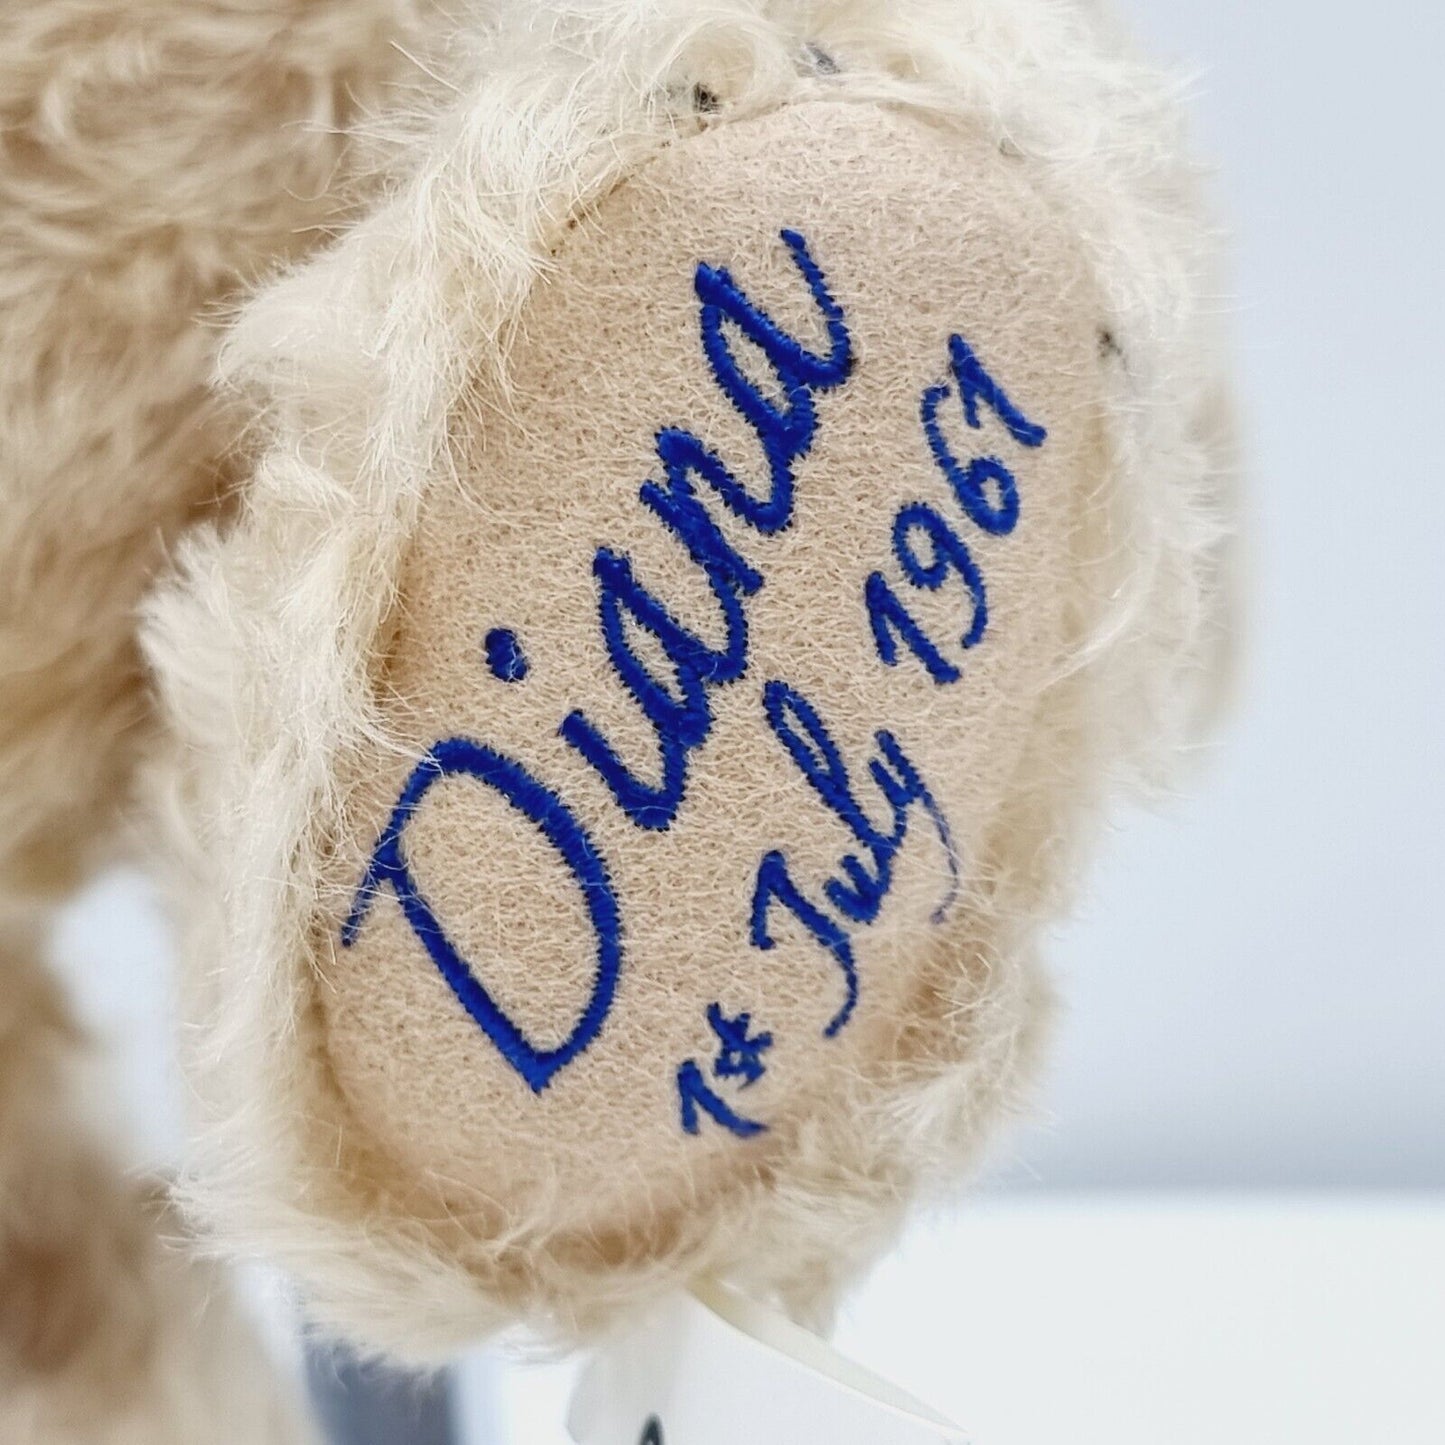 Steiff Danbury Mint 663840 Teddybär Diana limitiert 1961 aus 2011 30cm Mohair